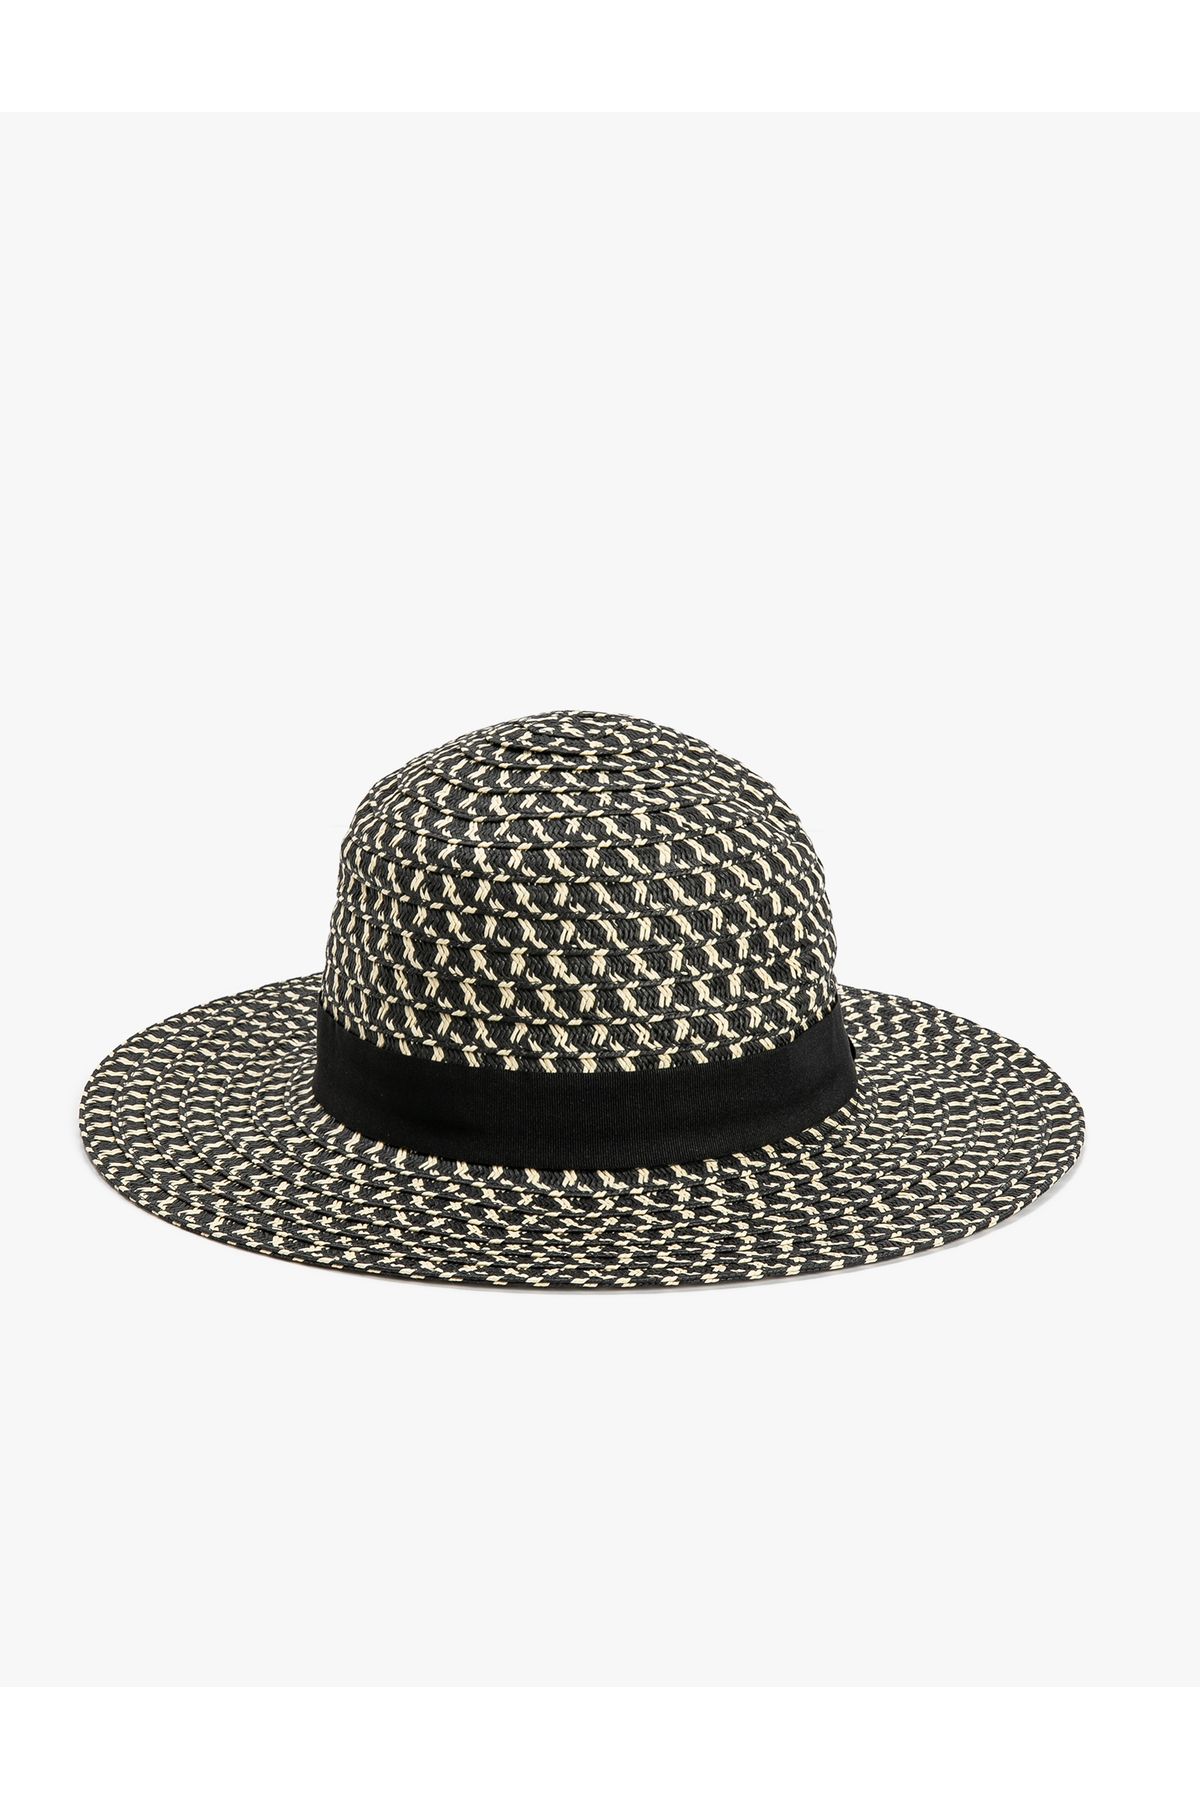 Koton Hasır Şapka Bant Detaylı